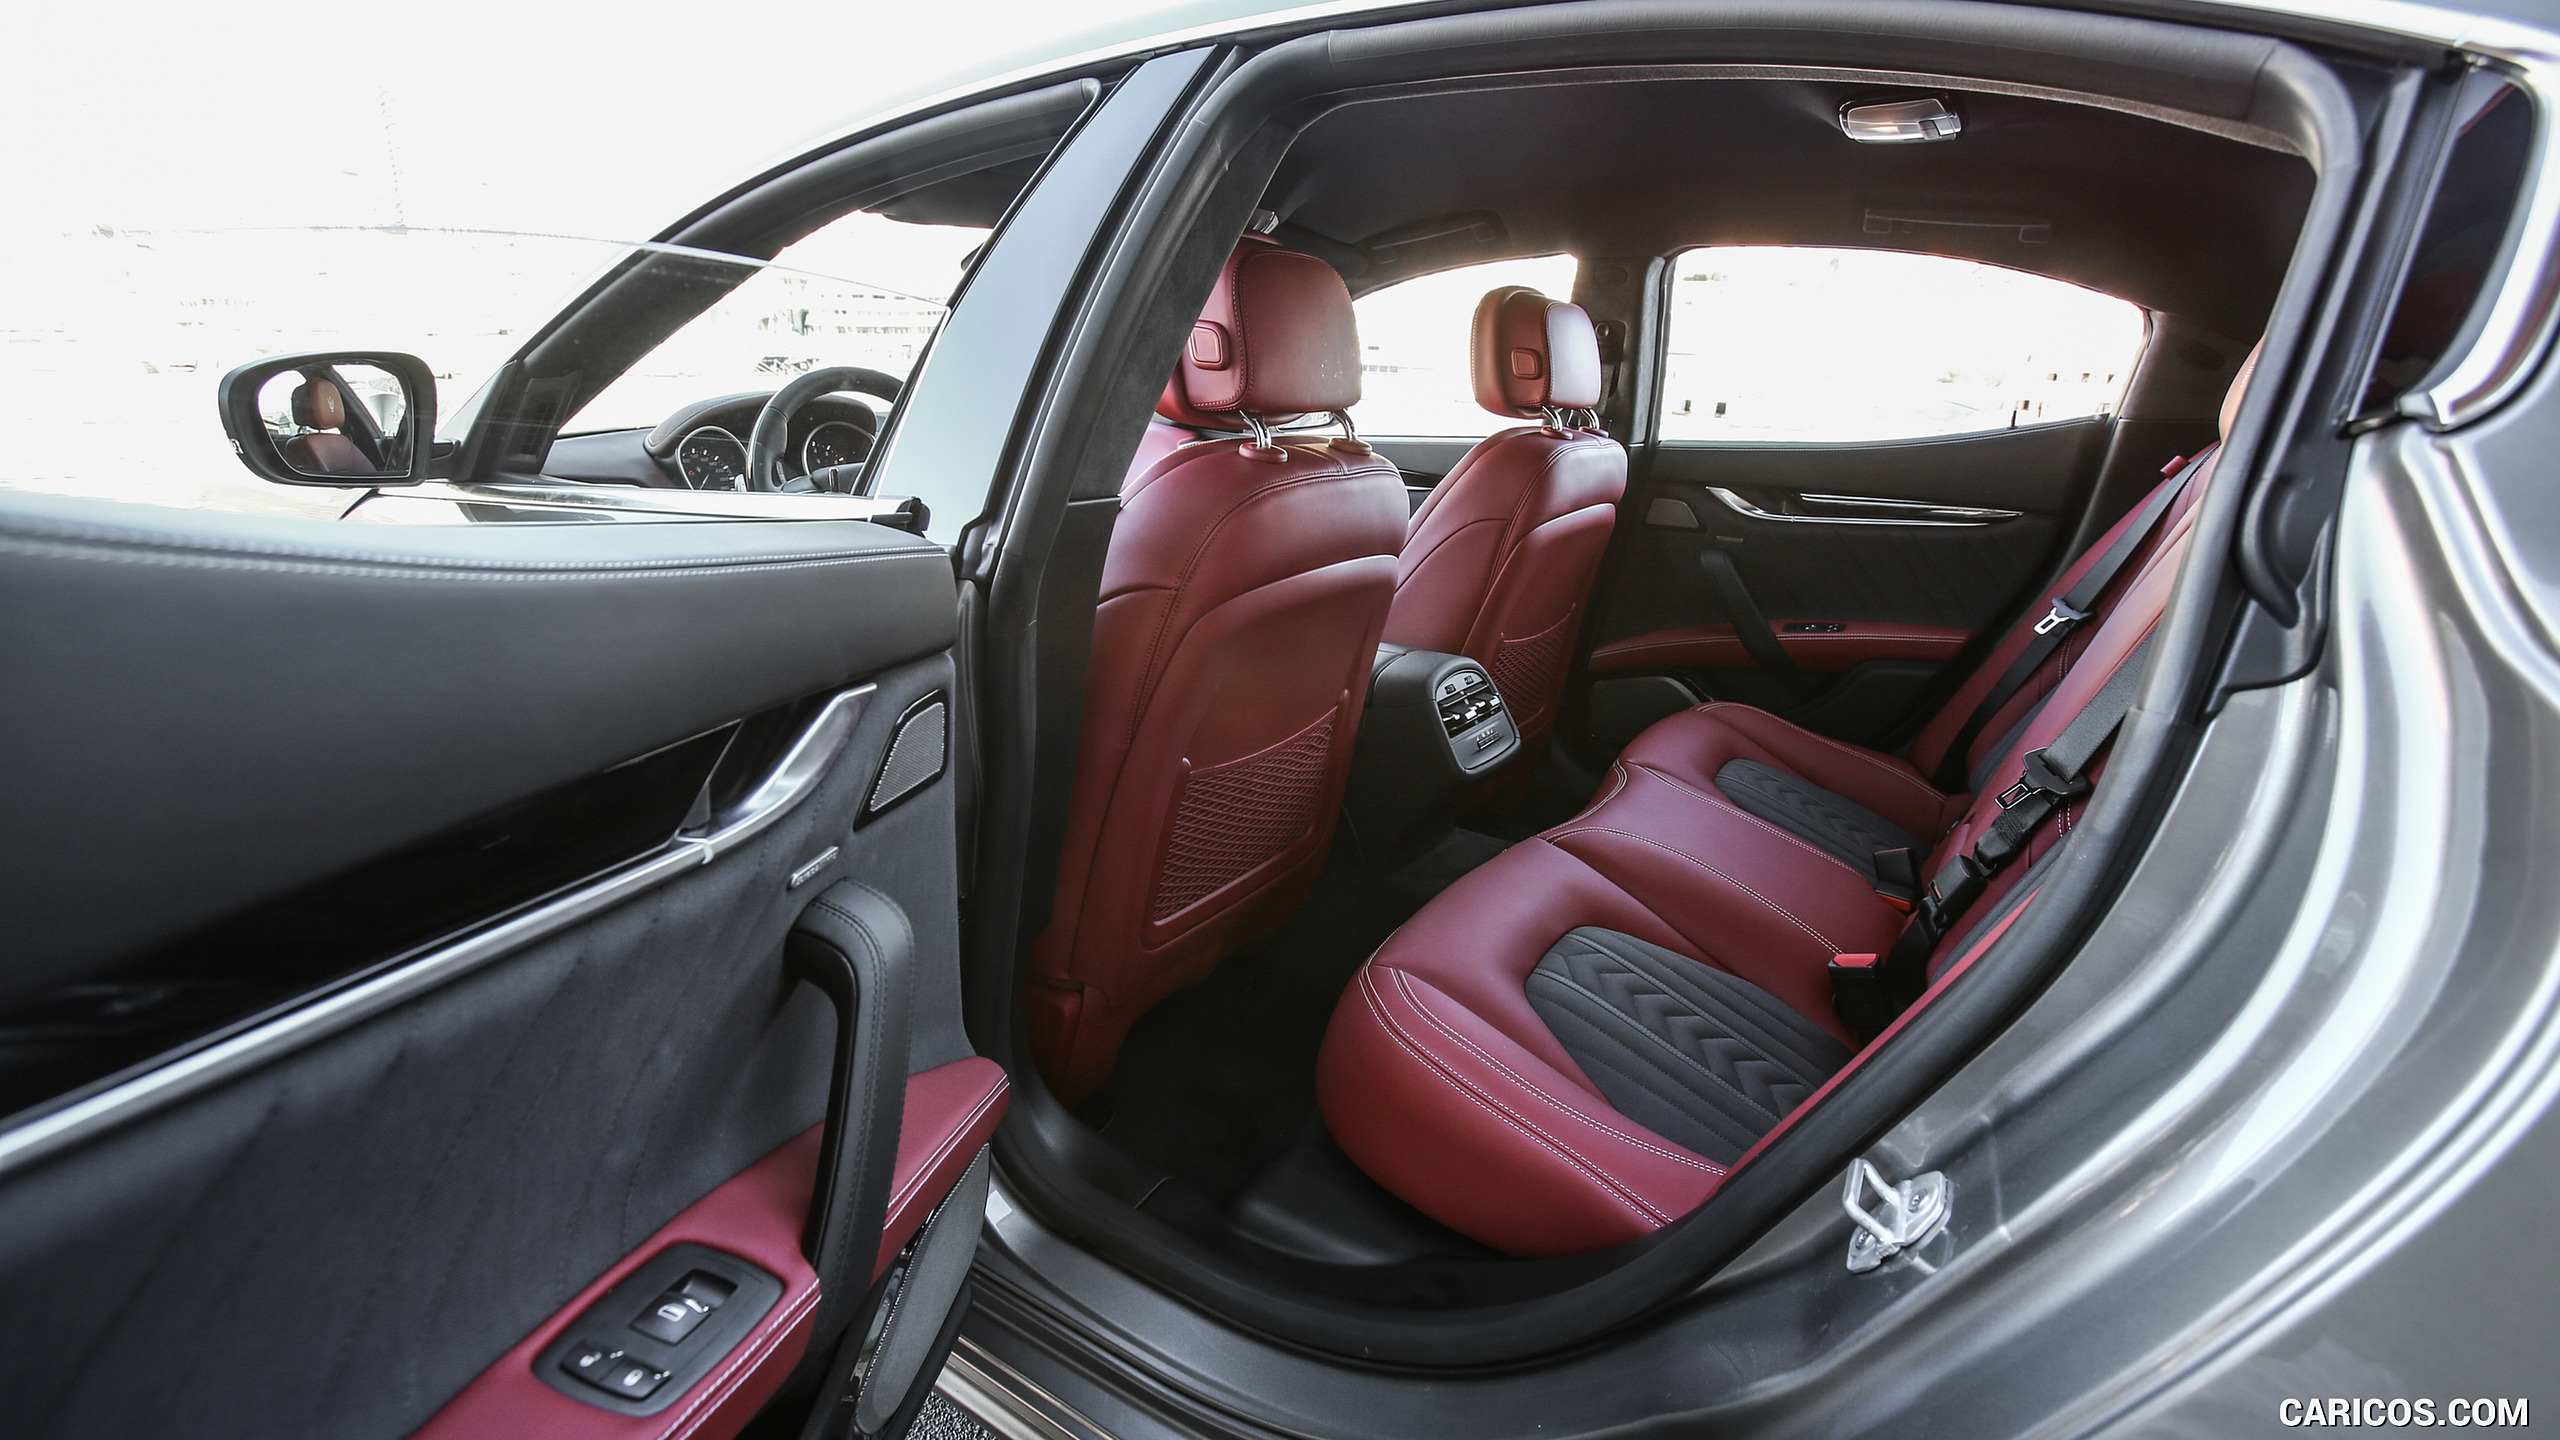 2017 Maserati Ghibli SQ4 Luxury Package - Interior, Rear Seats, #70 of 85